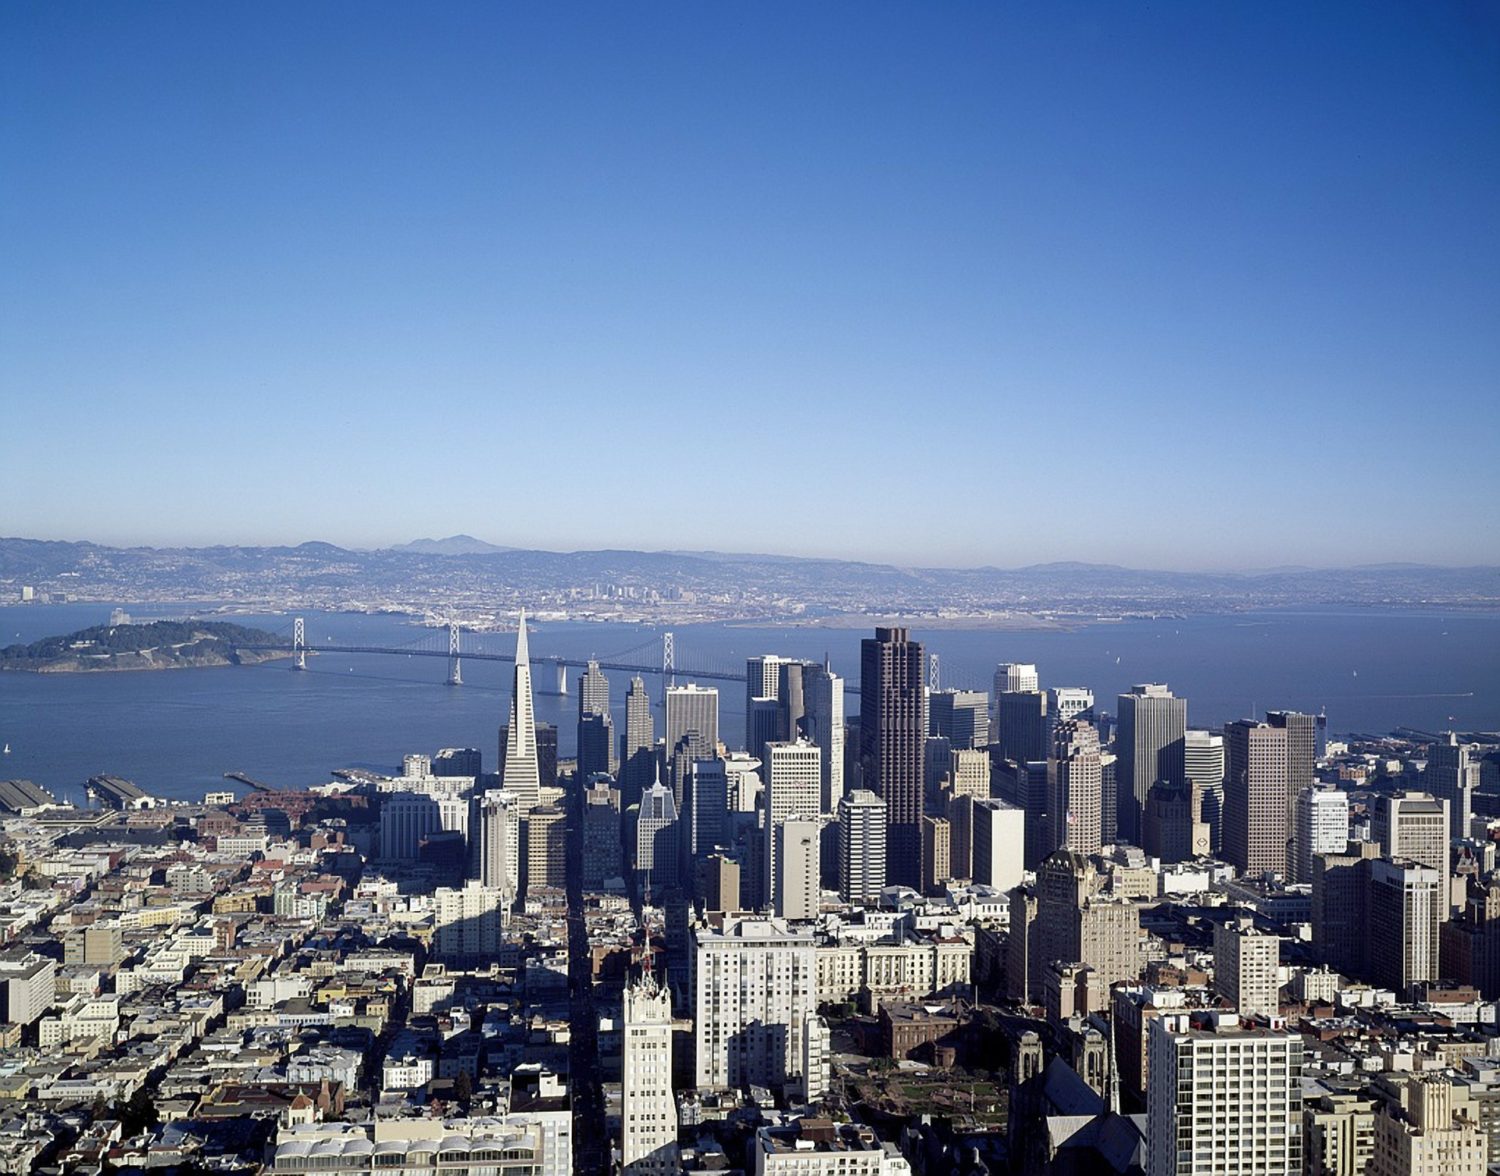 Aerial view of San Francisco, California